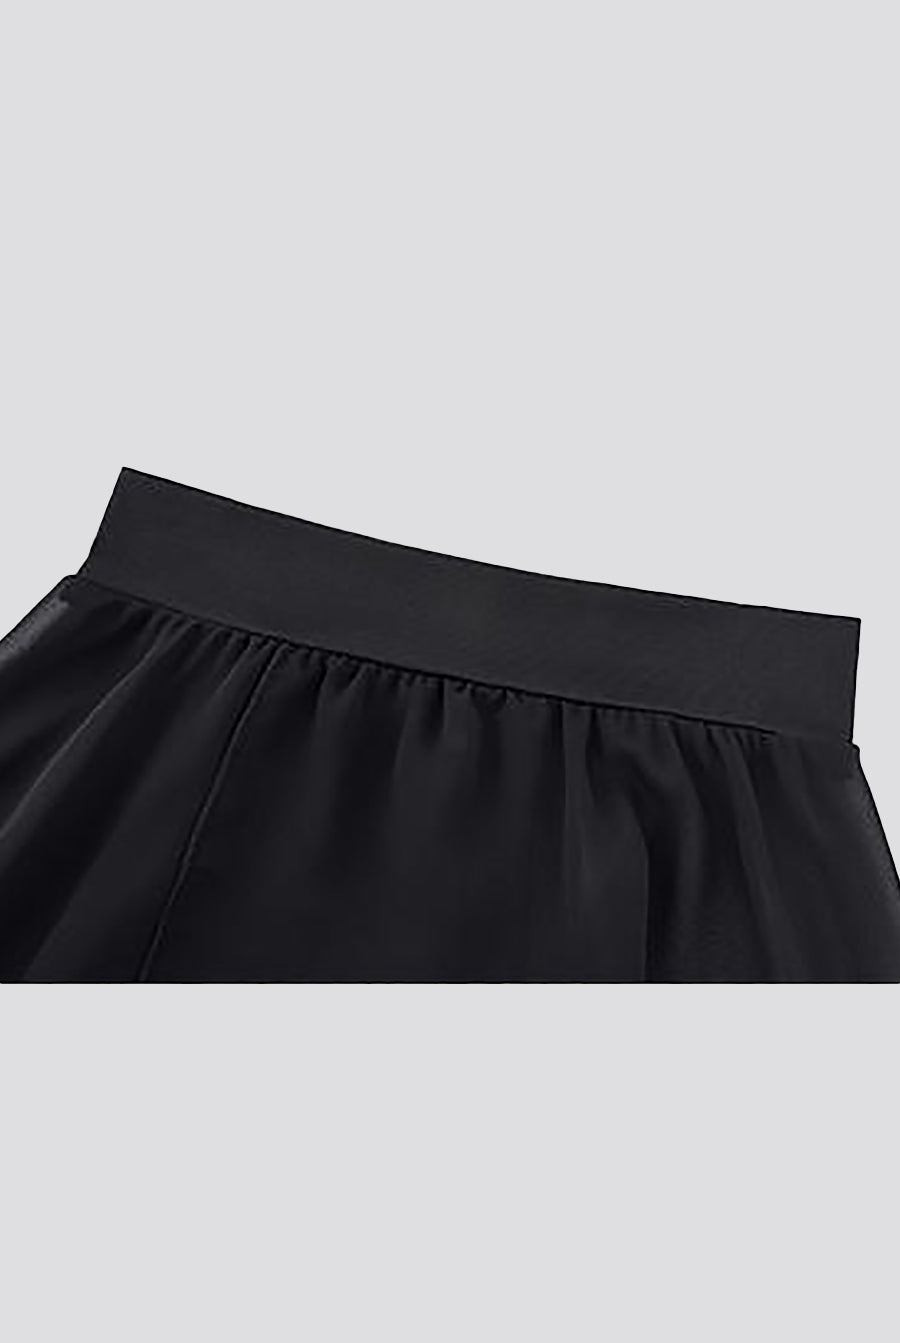 ballet skirt black front view